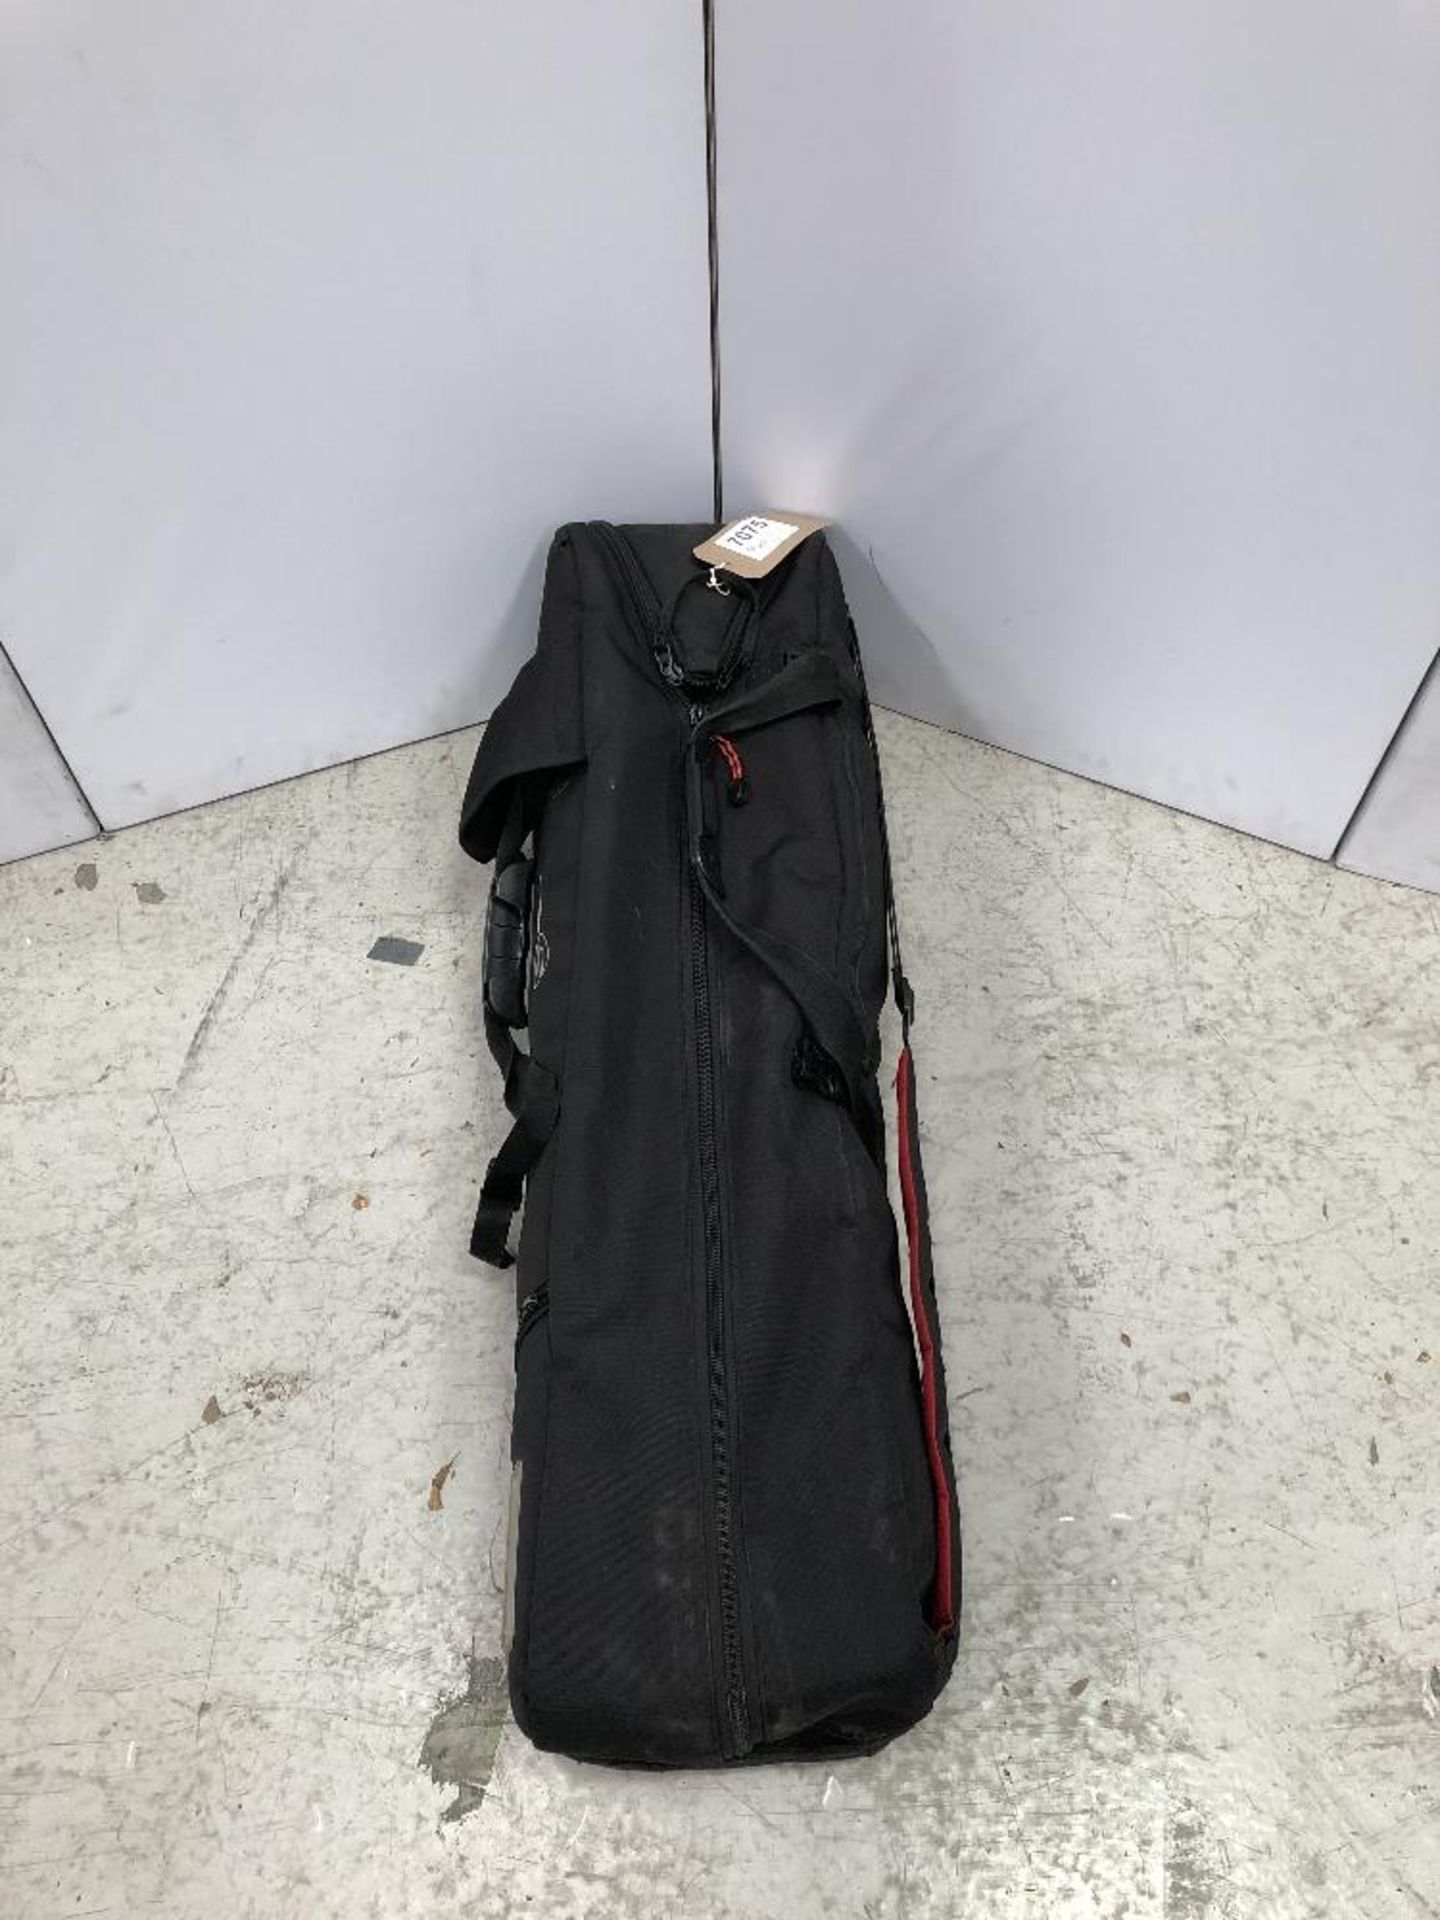 Sachtler V18 S1 Carbon Fibre Medium Camera Tripod With Fluid Head And Sachtler Carry Bag - Image 6 of 6